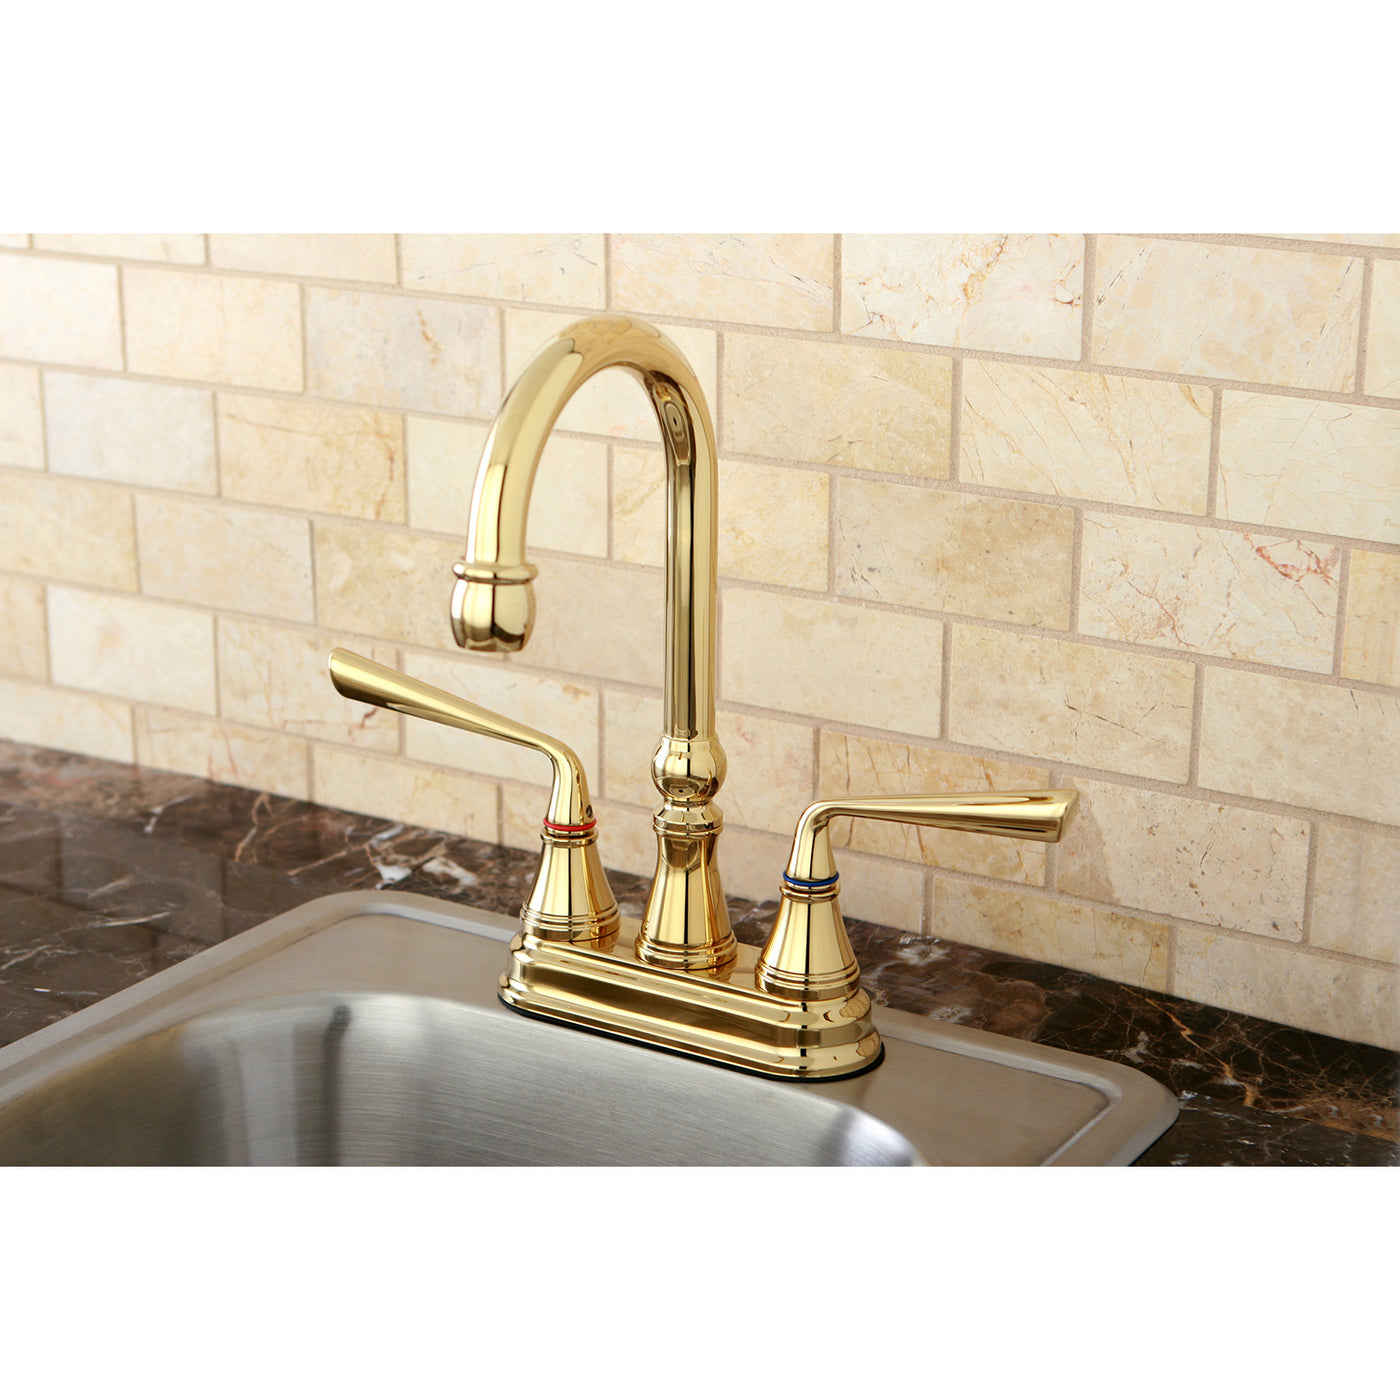 Elements of Design ES2492ZL 4-Inch Centerset Bar Faucet, Polished Brass